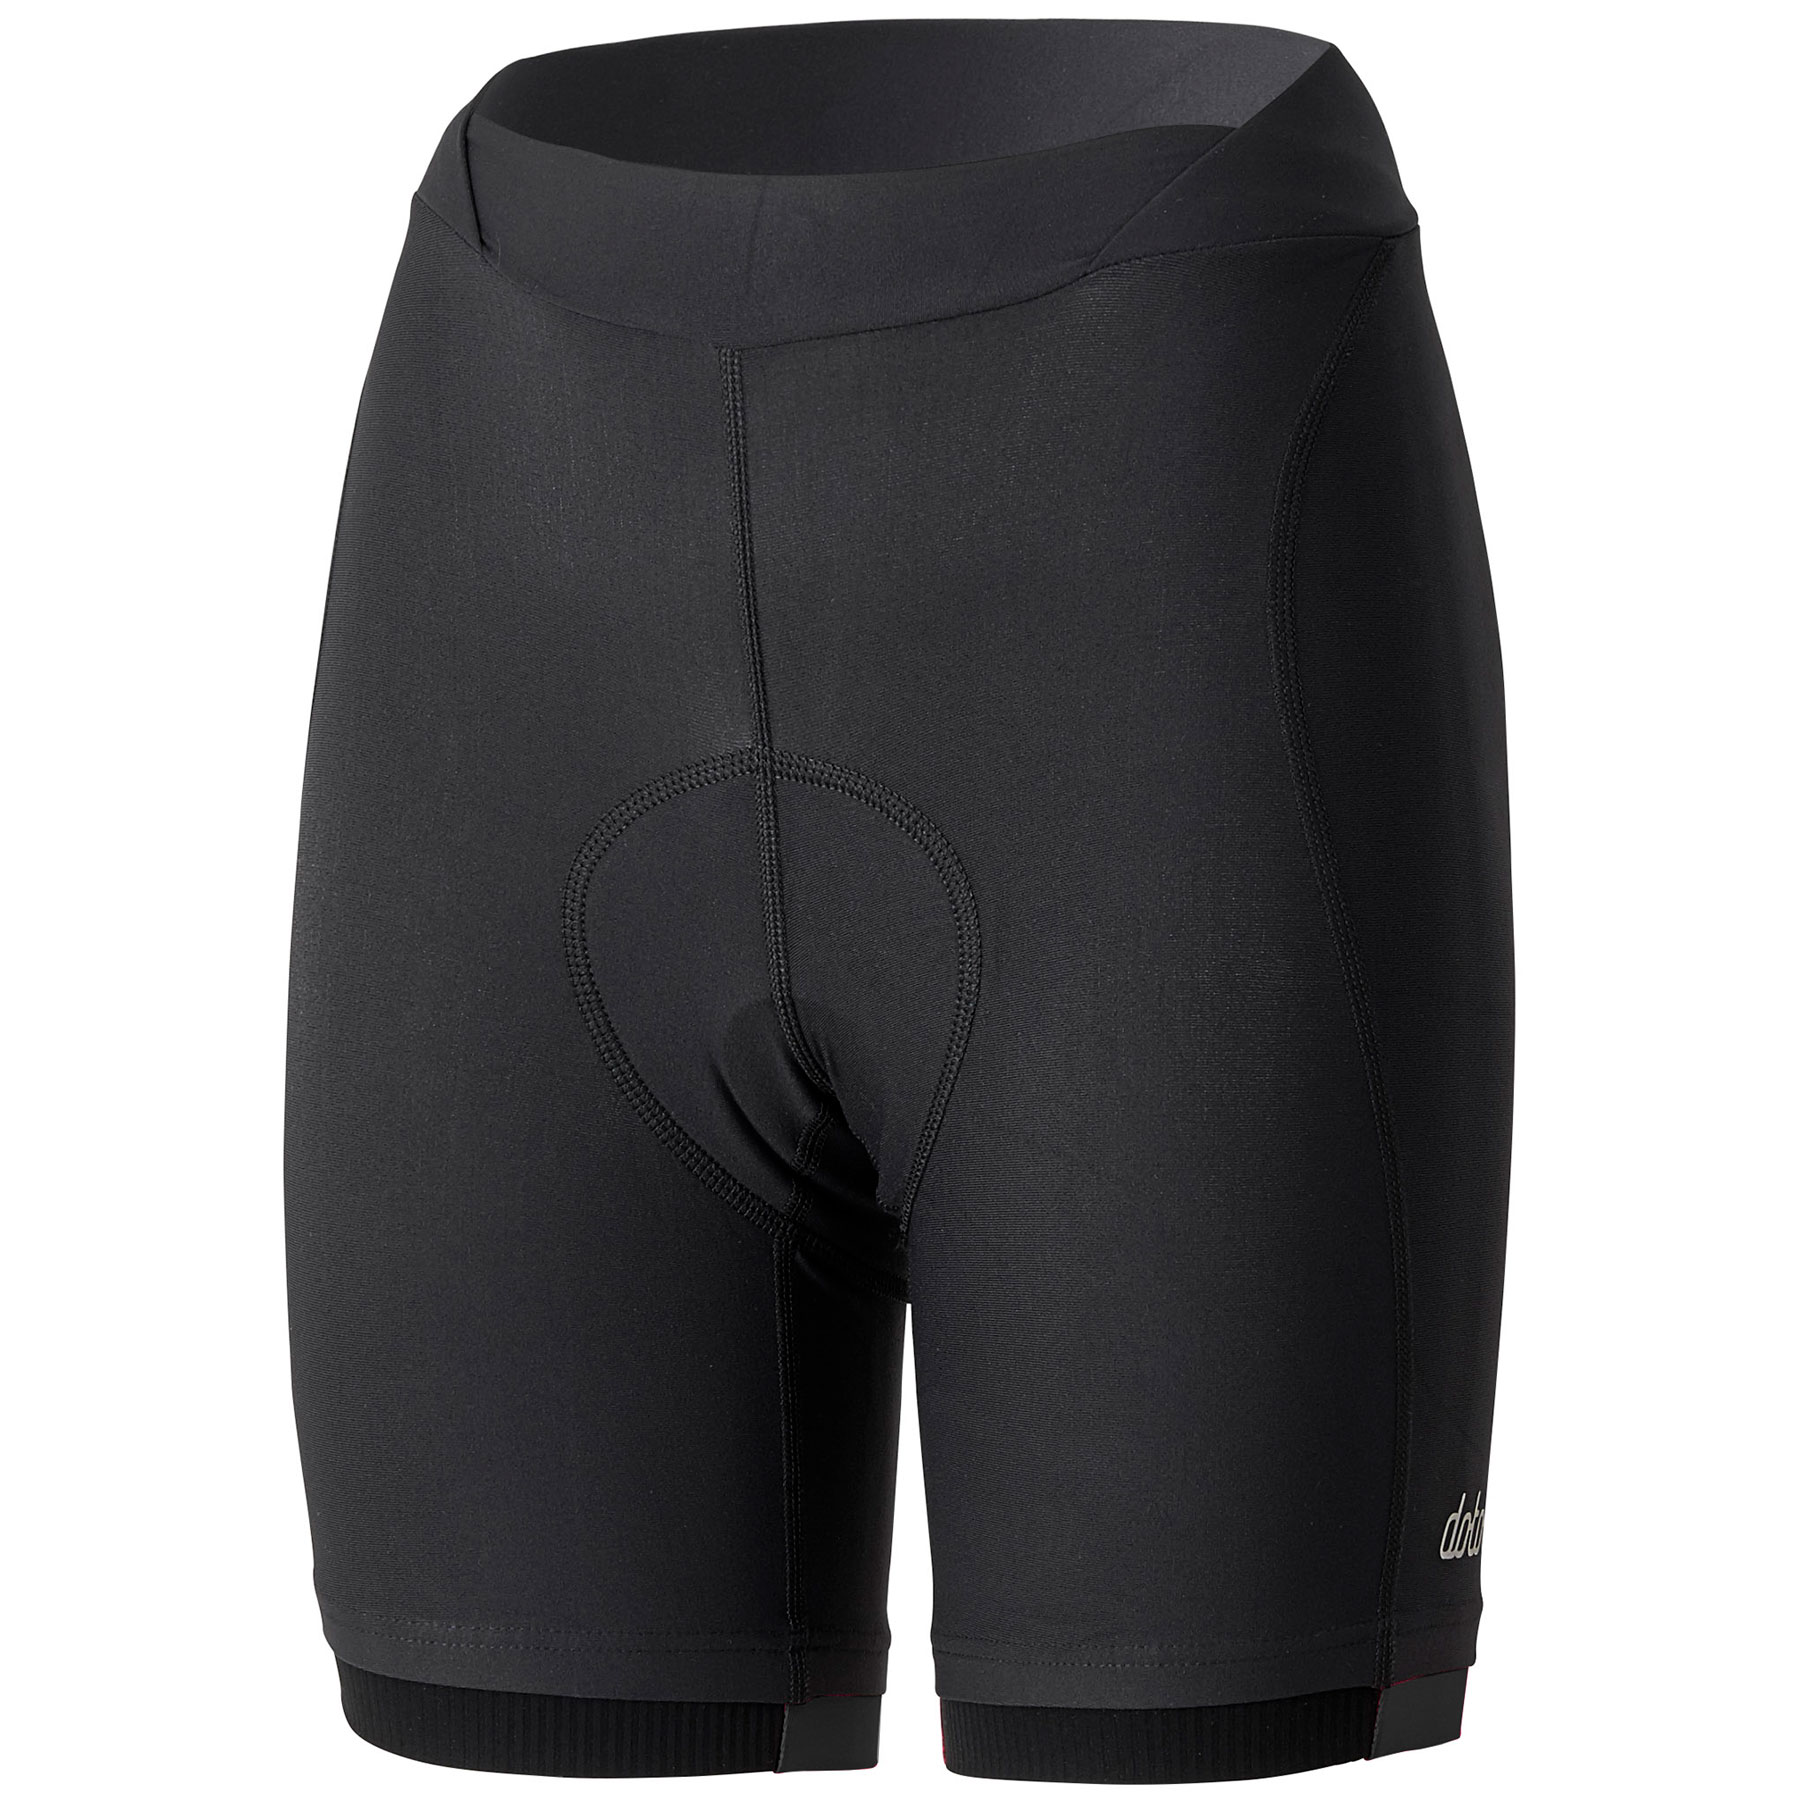 Image of Dotout Instinct Women's Cycling Shorts - black/black